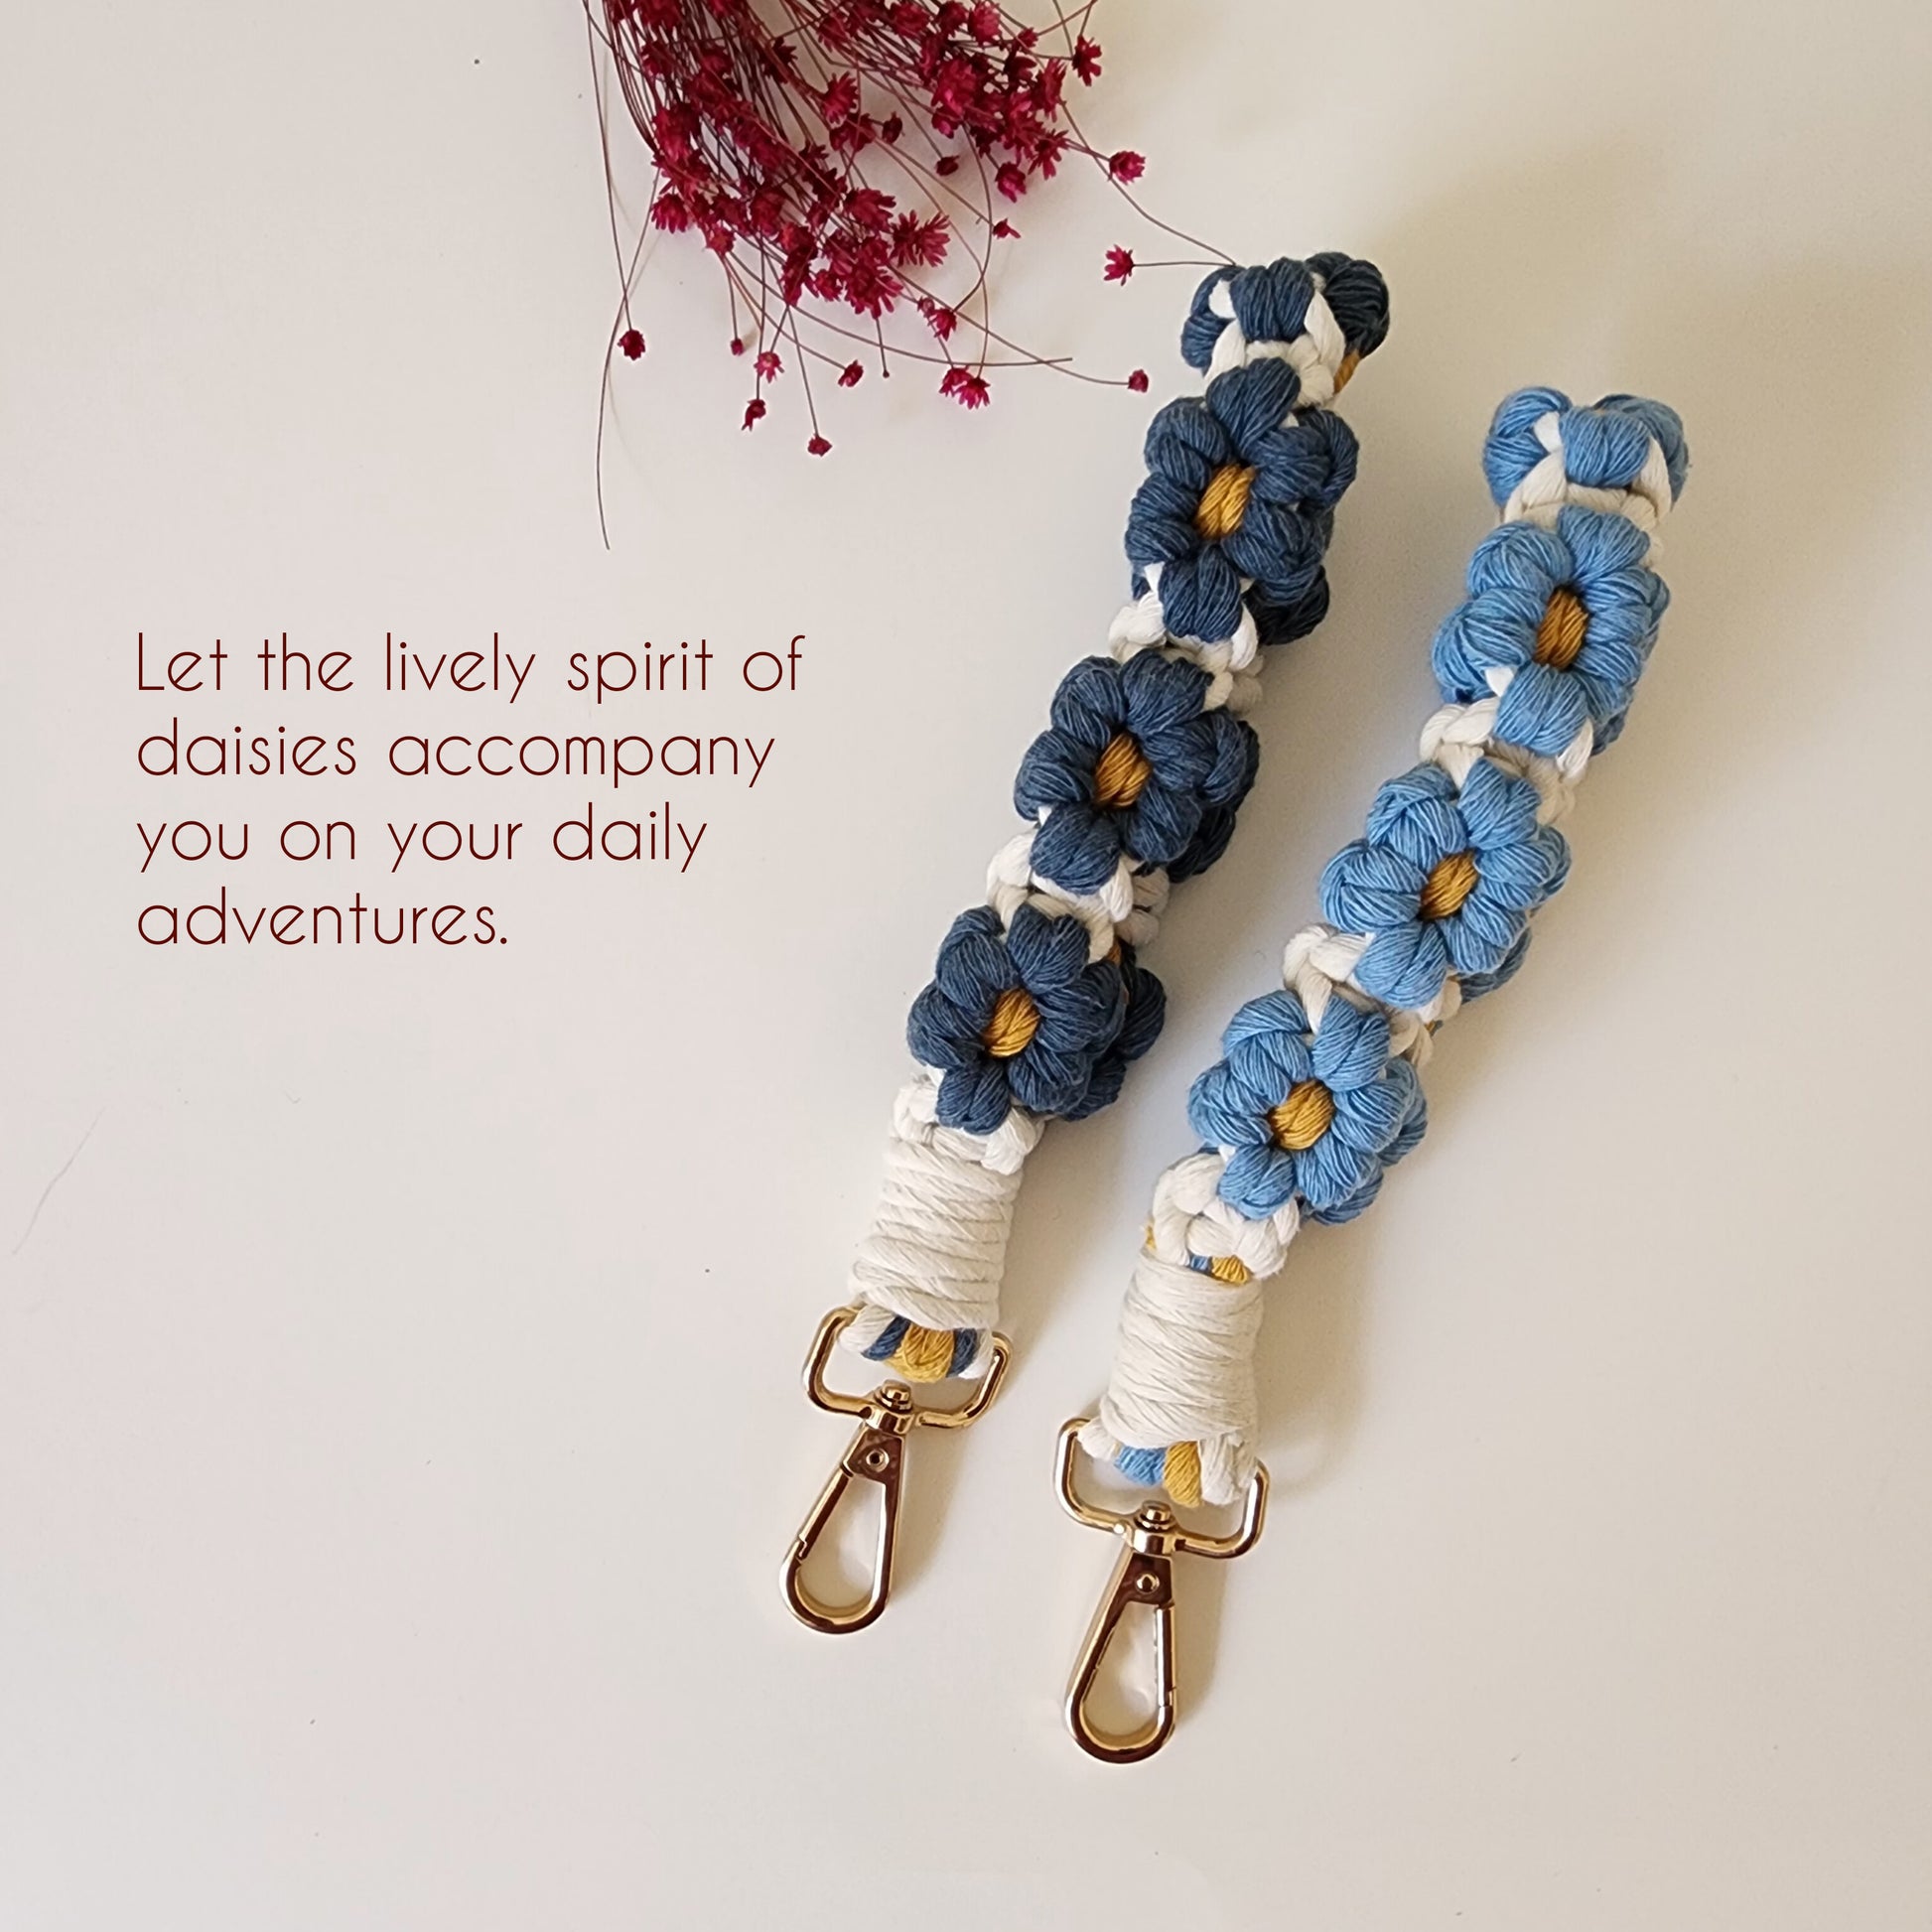 Daisy keychain accessories pattern by Vita Lavriv